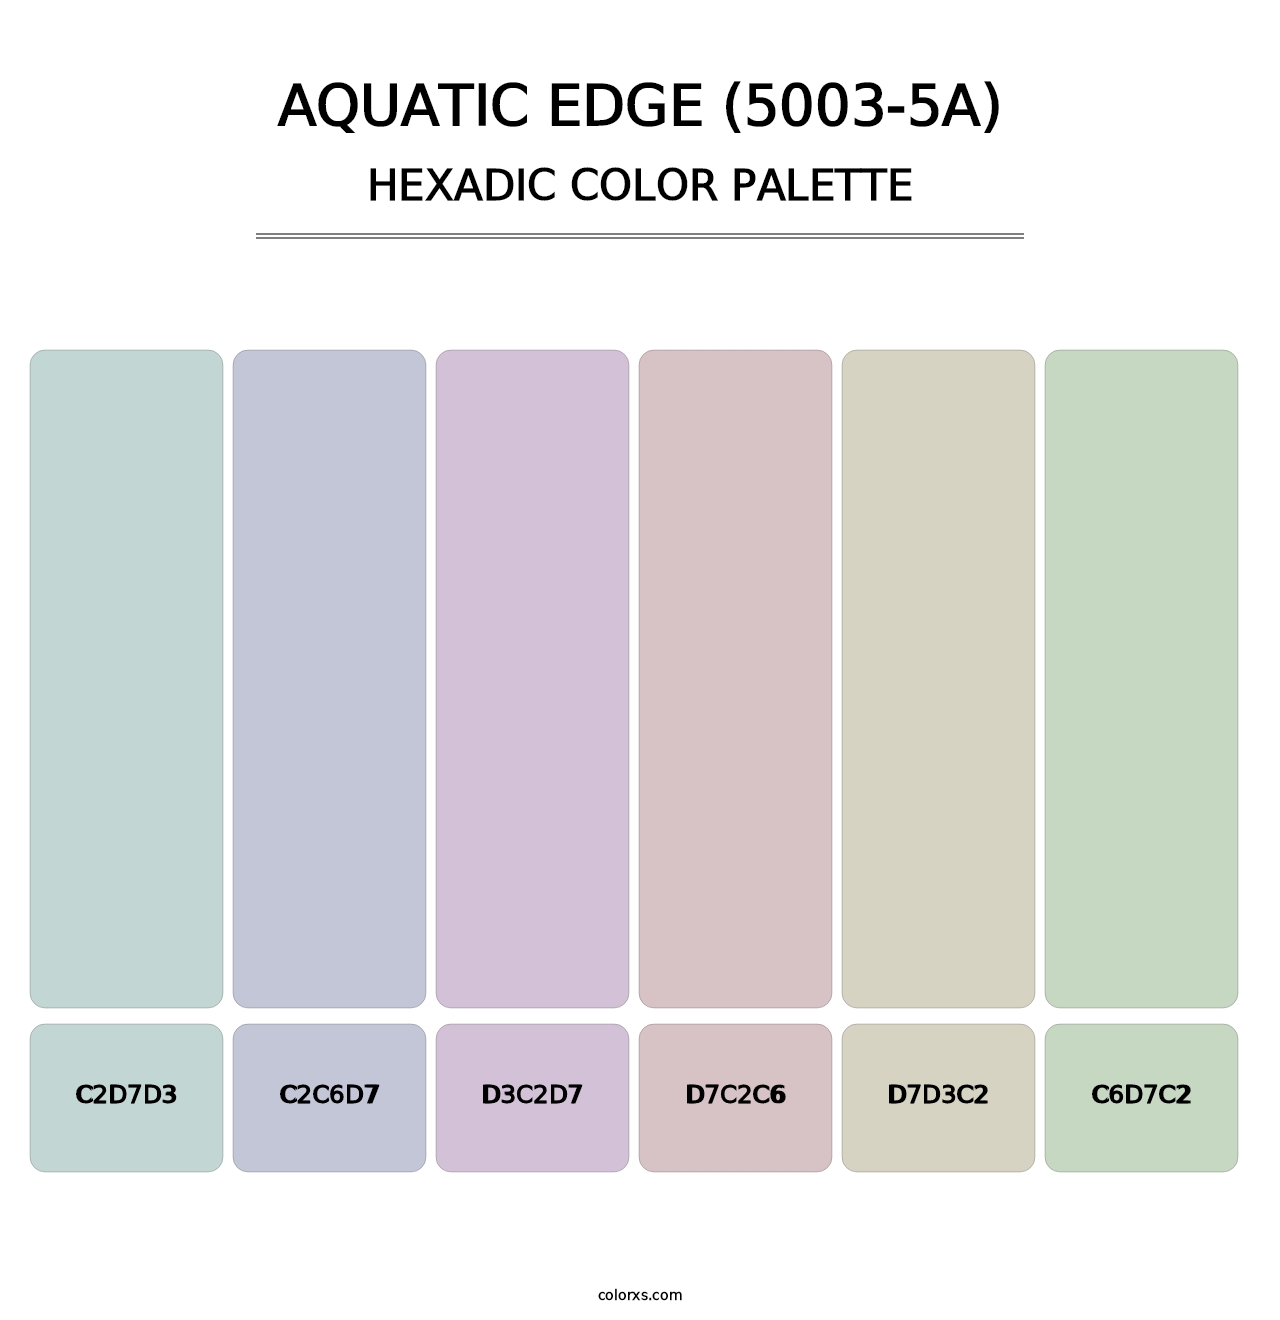 Aquatic Edge (5003-5A) - Hexadic Color Palette